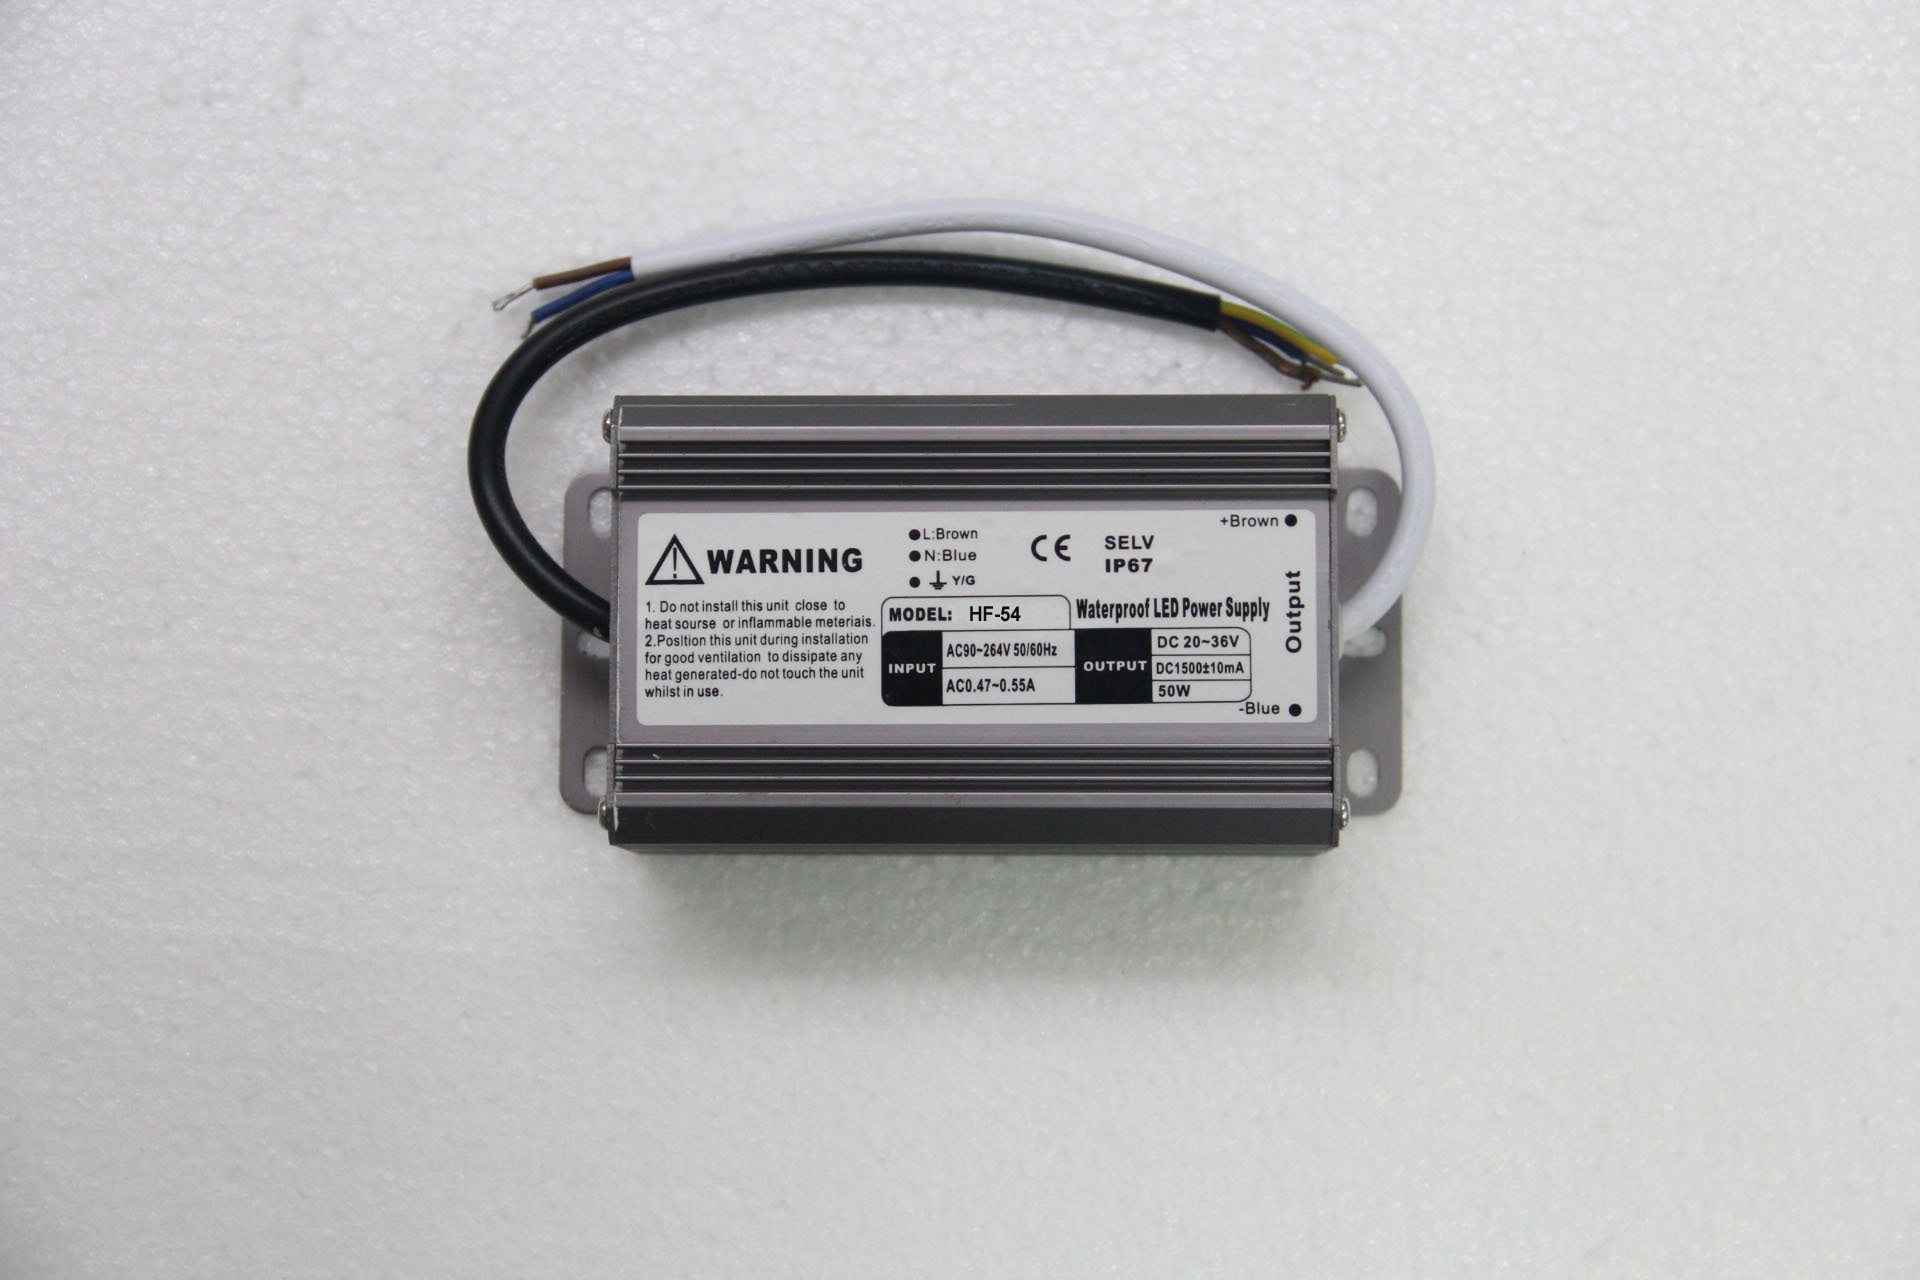 EMC 250V AC 54 Watt Constant Current LED Power Supply 1500mA For Indoor LED Lights